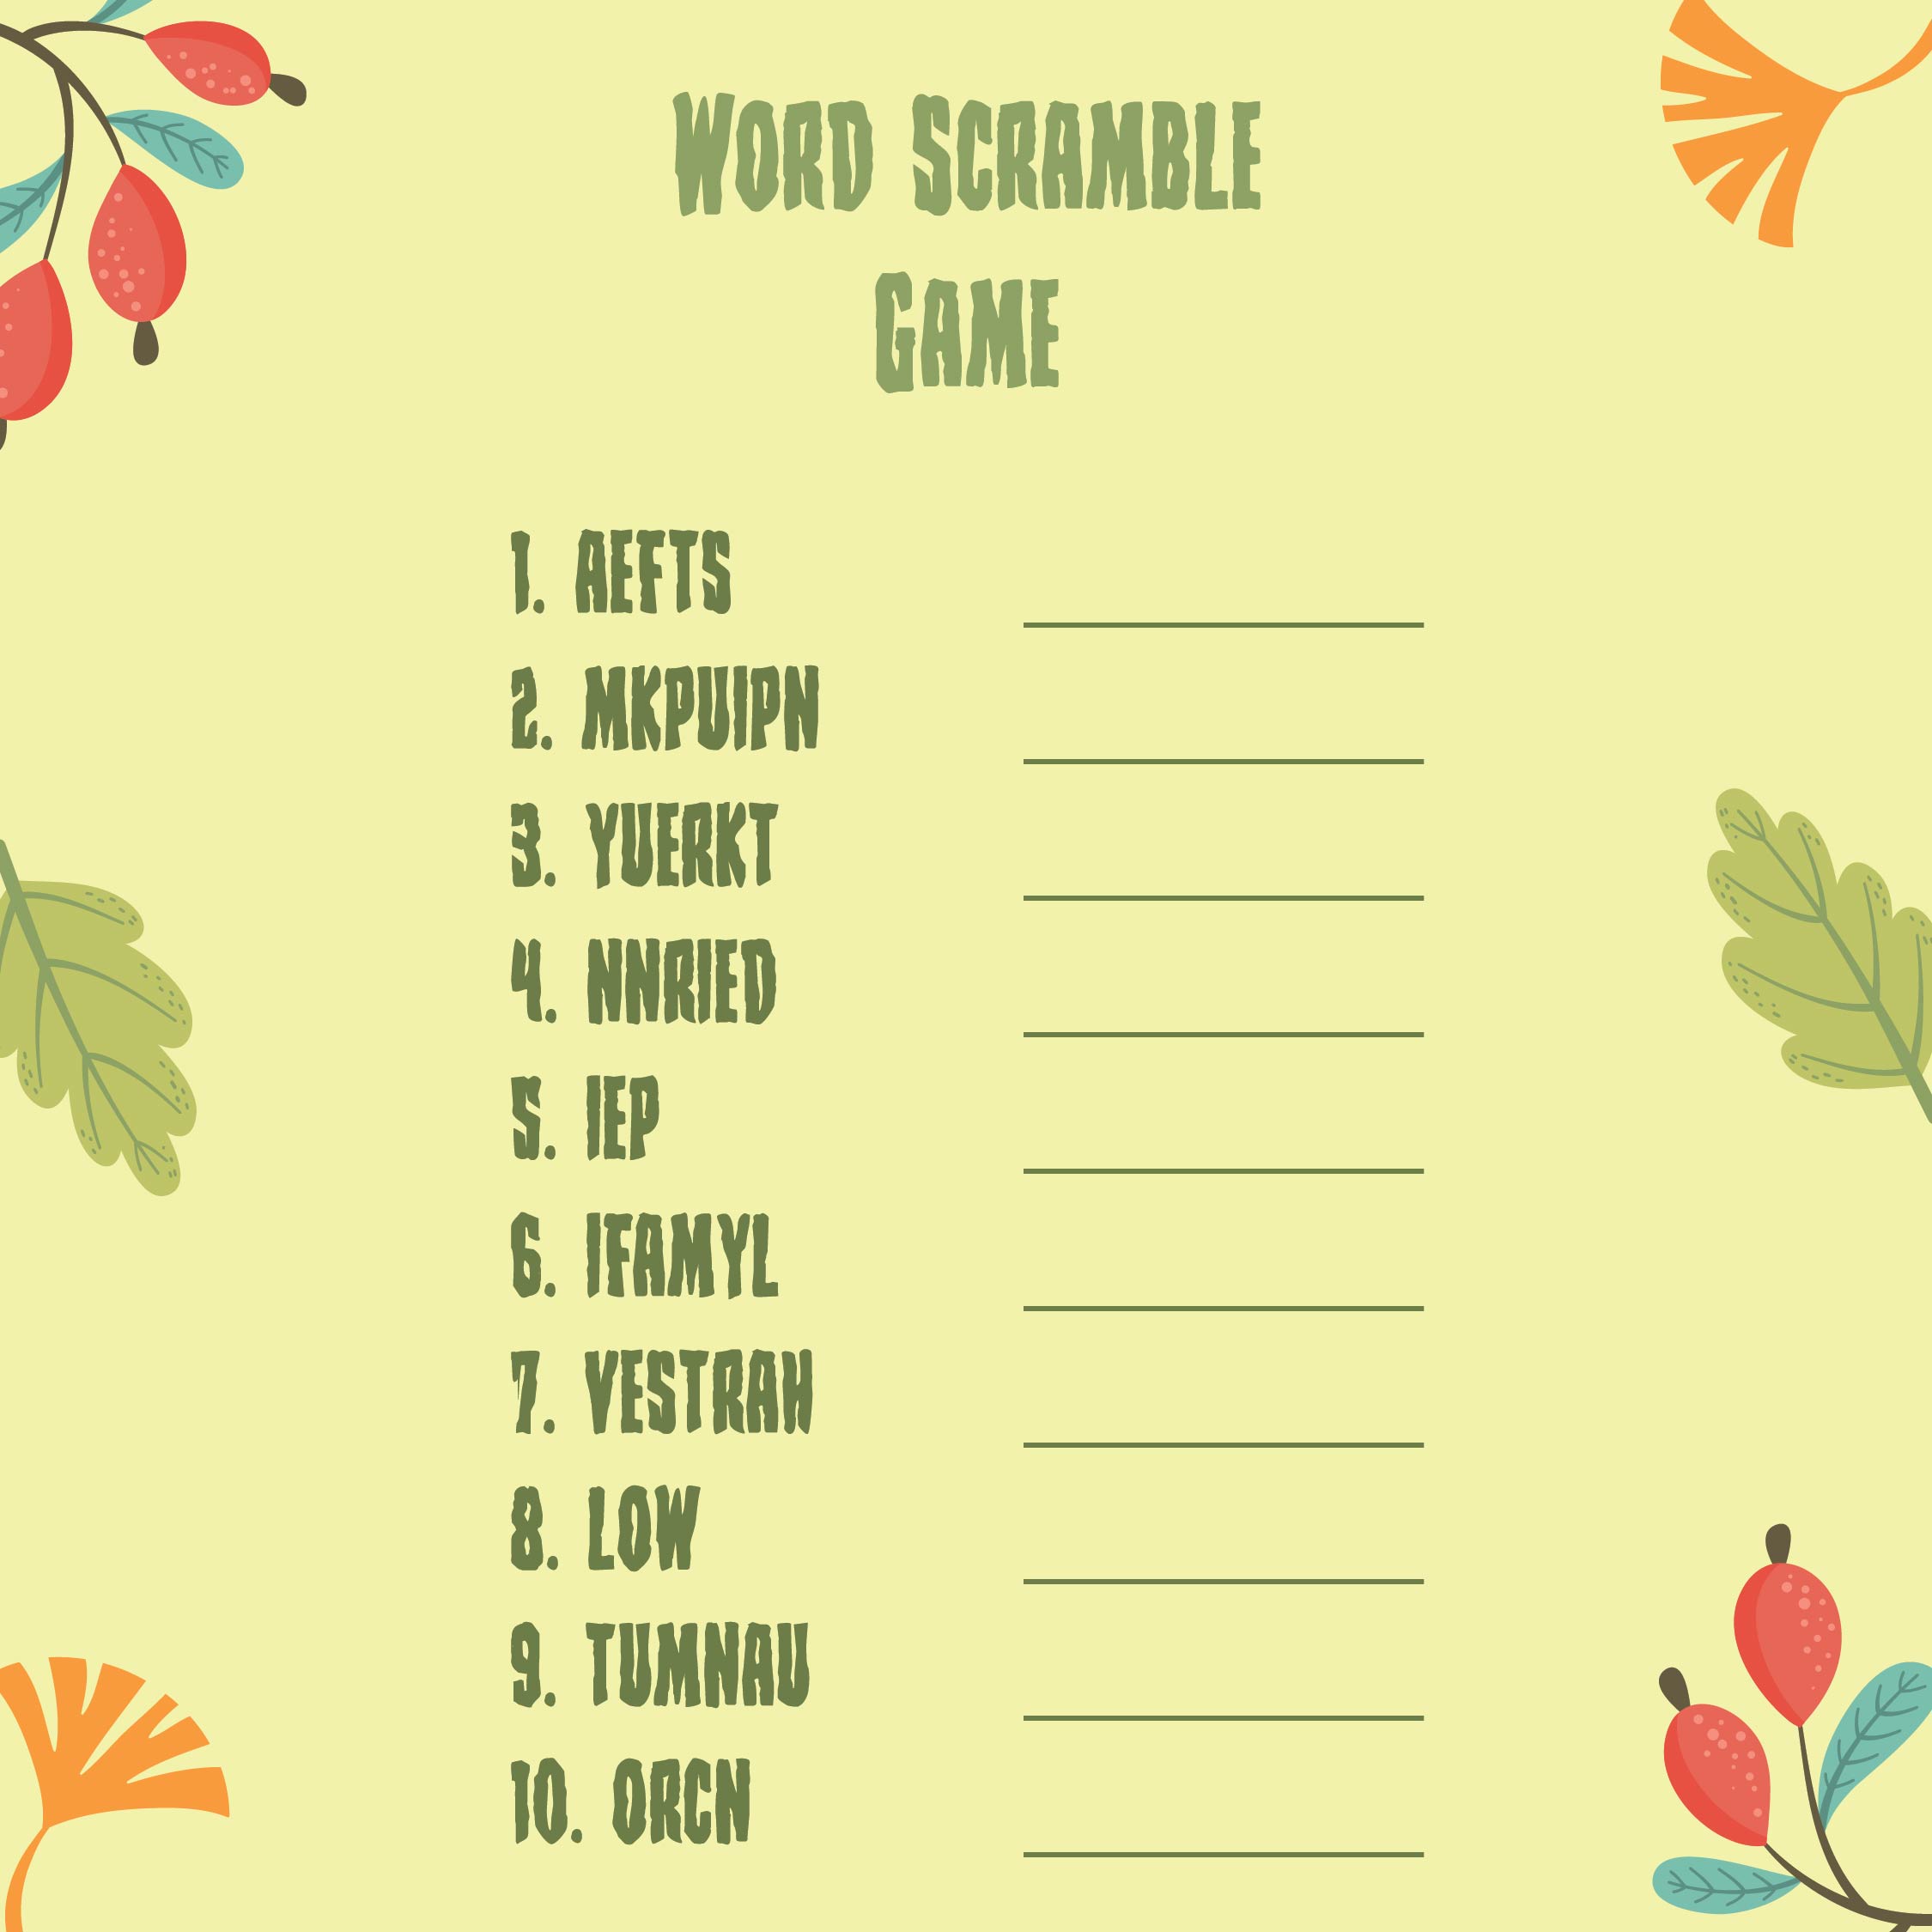 5 Best Printable Thanksgiving Word Scramble Game